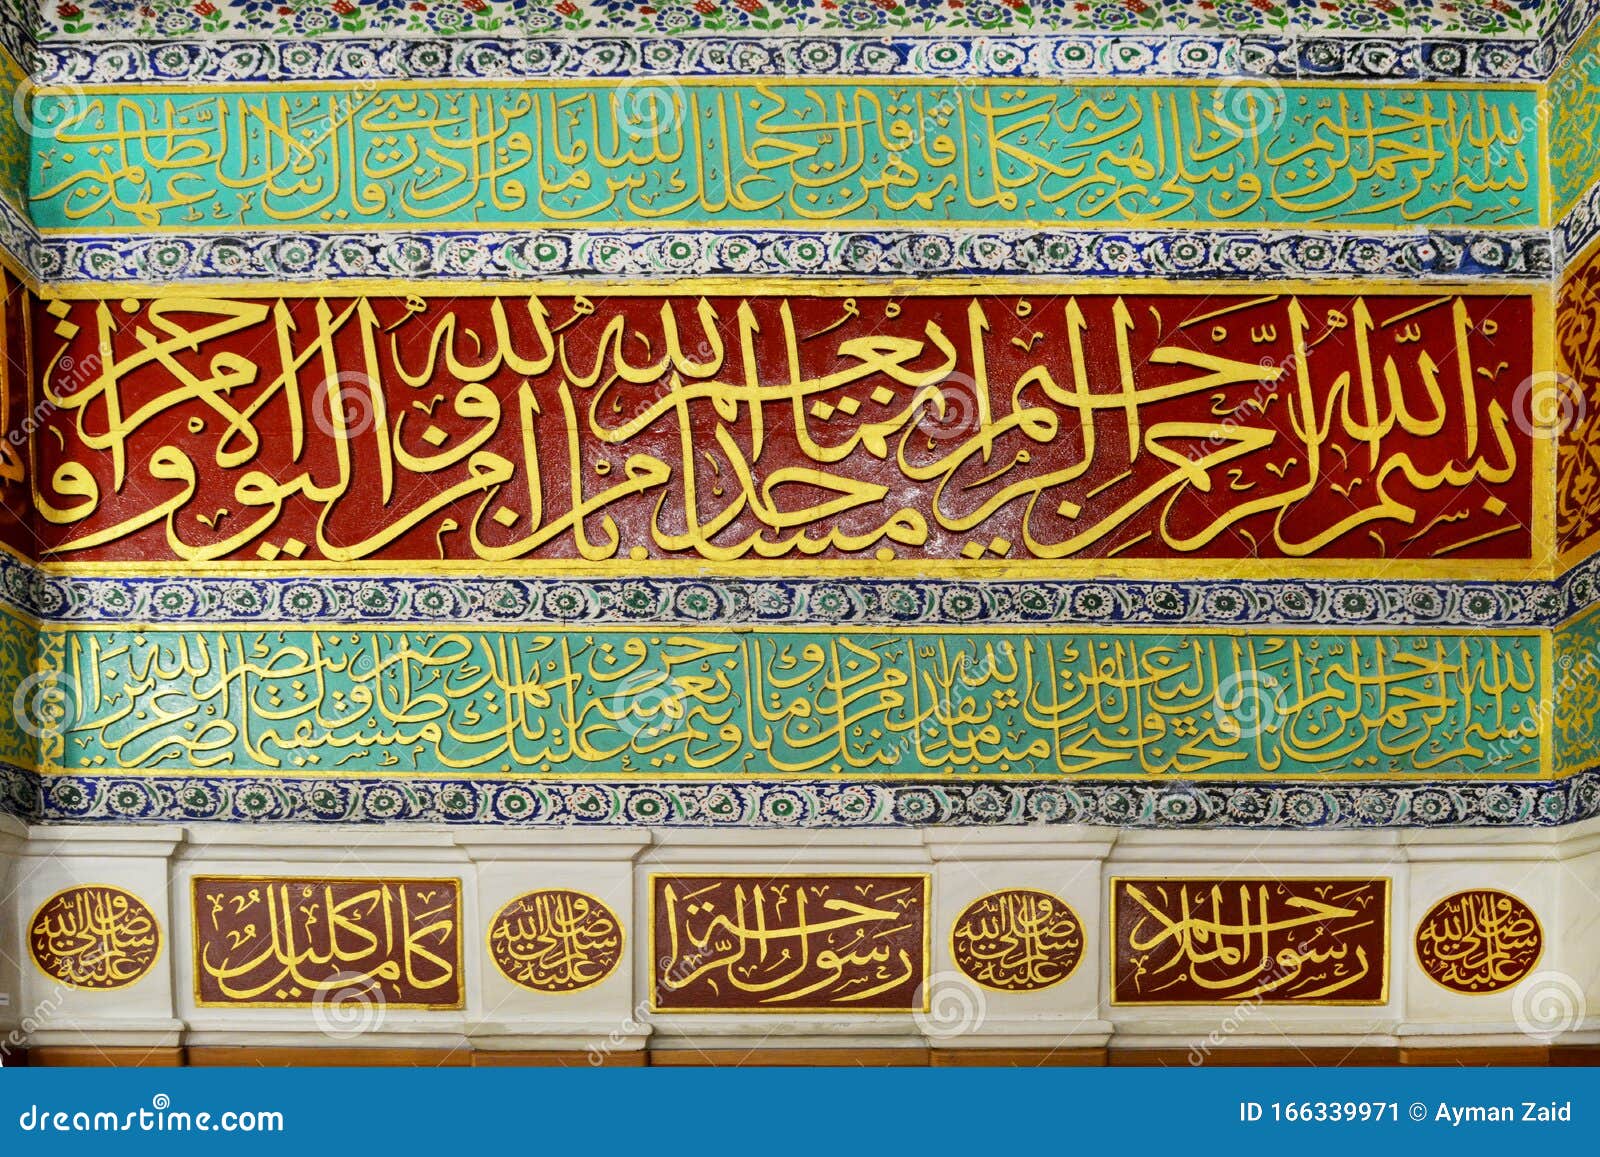 medina/saudi arabia - may 30, 2015: prophet mohammed mosque, arabic calligraphy inscriptions and islamic art ornament - interior